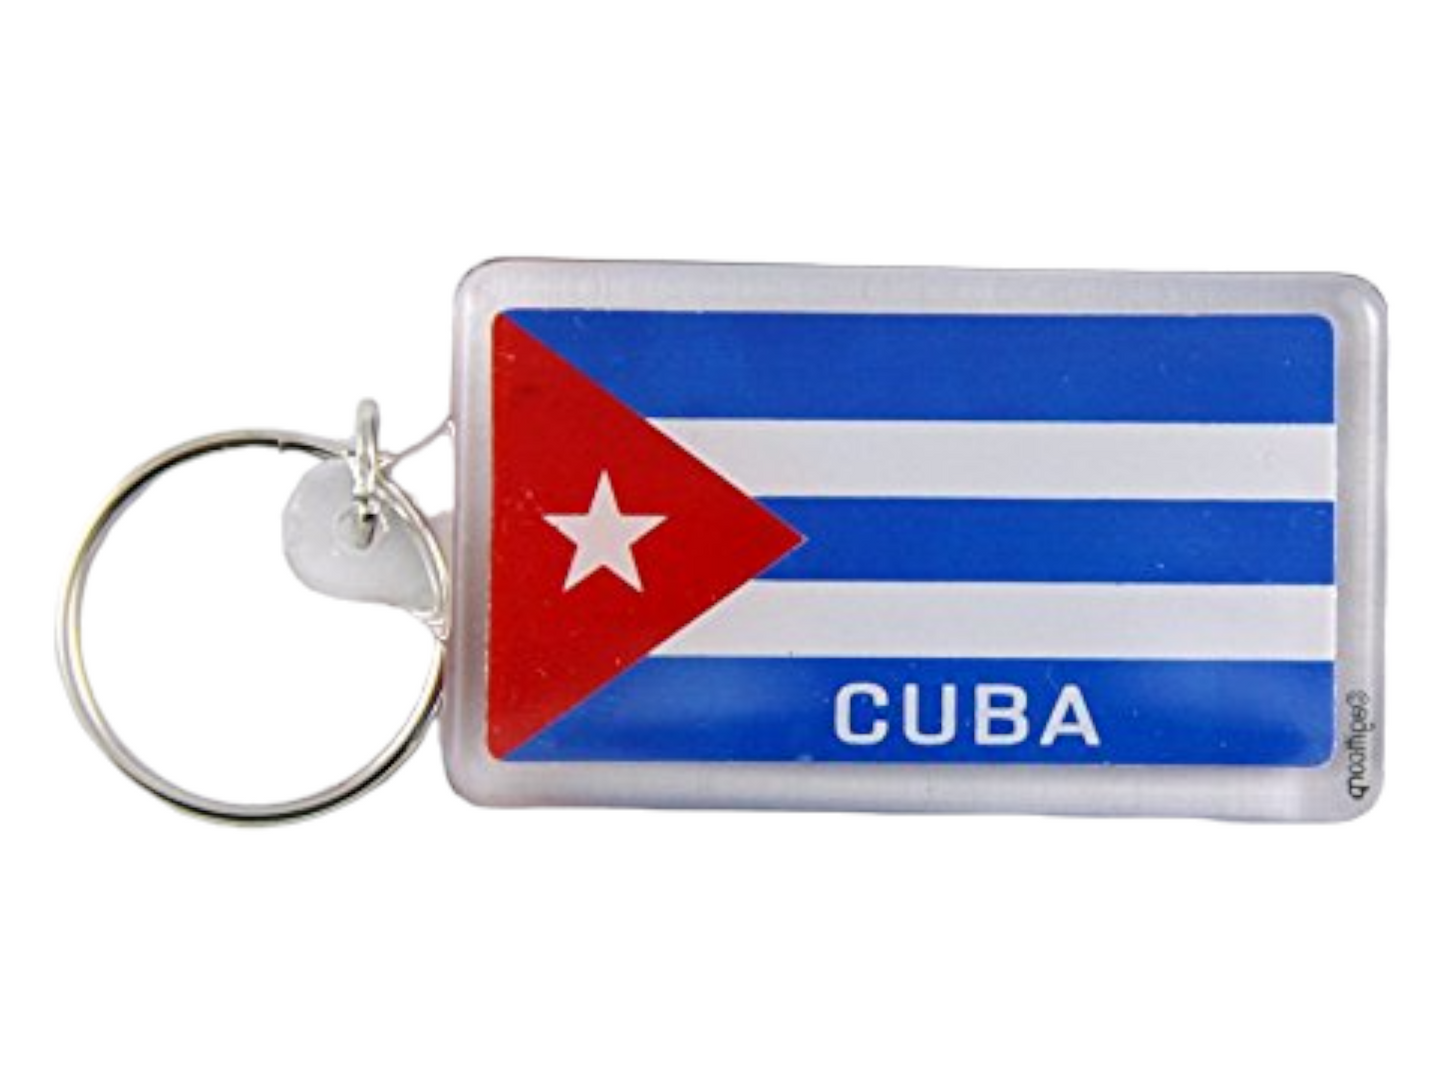 Cuba Flag Acrylic Rectangular Souvenir Keychain 2.5 inches X 1.5 inches